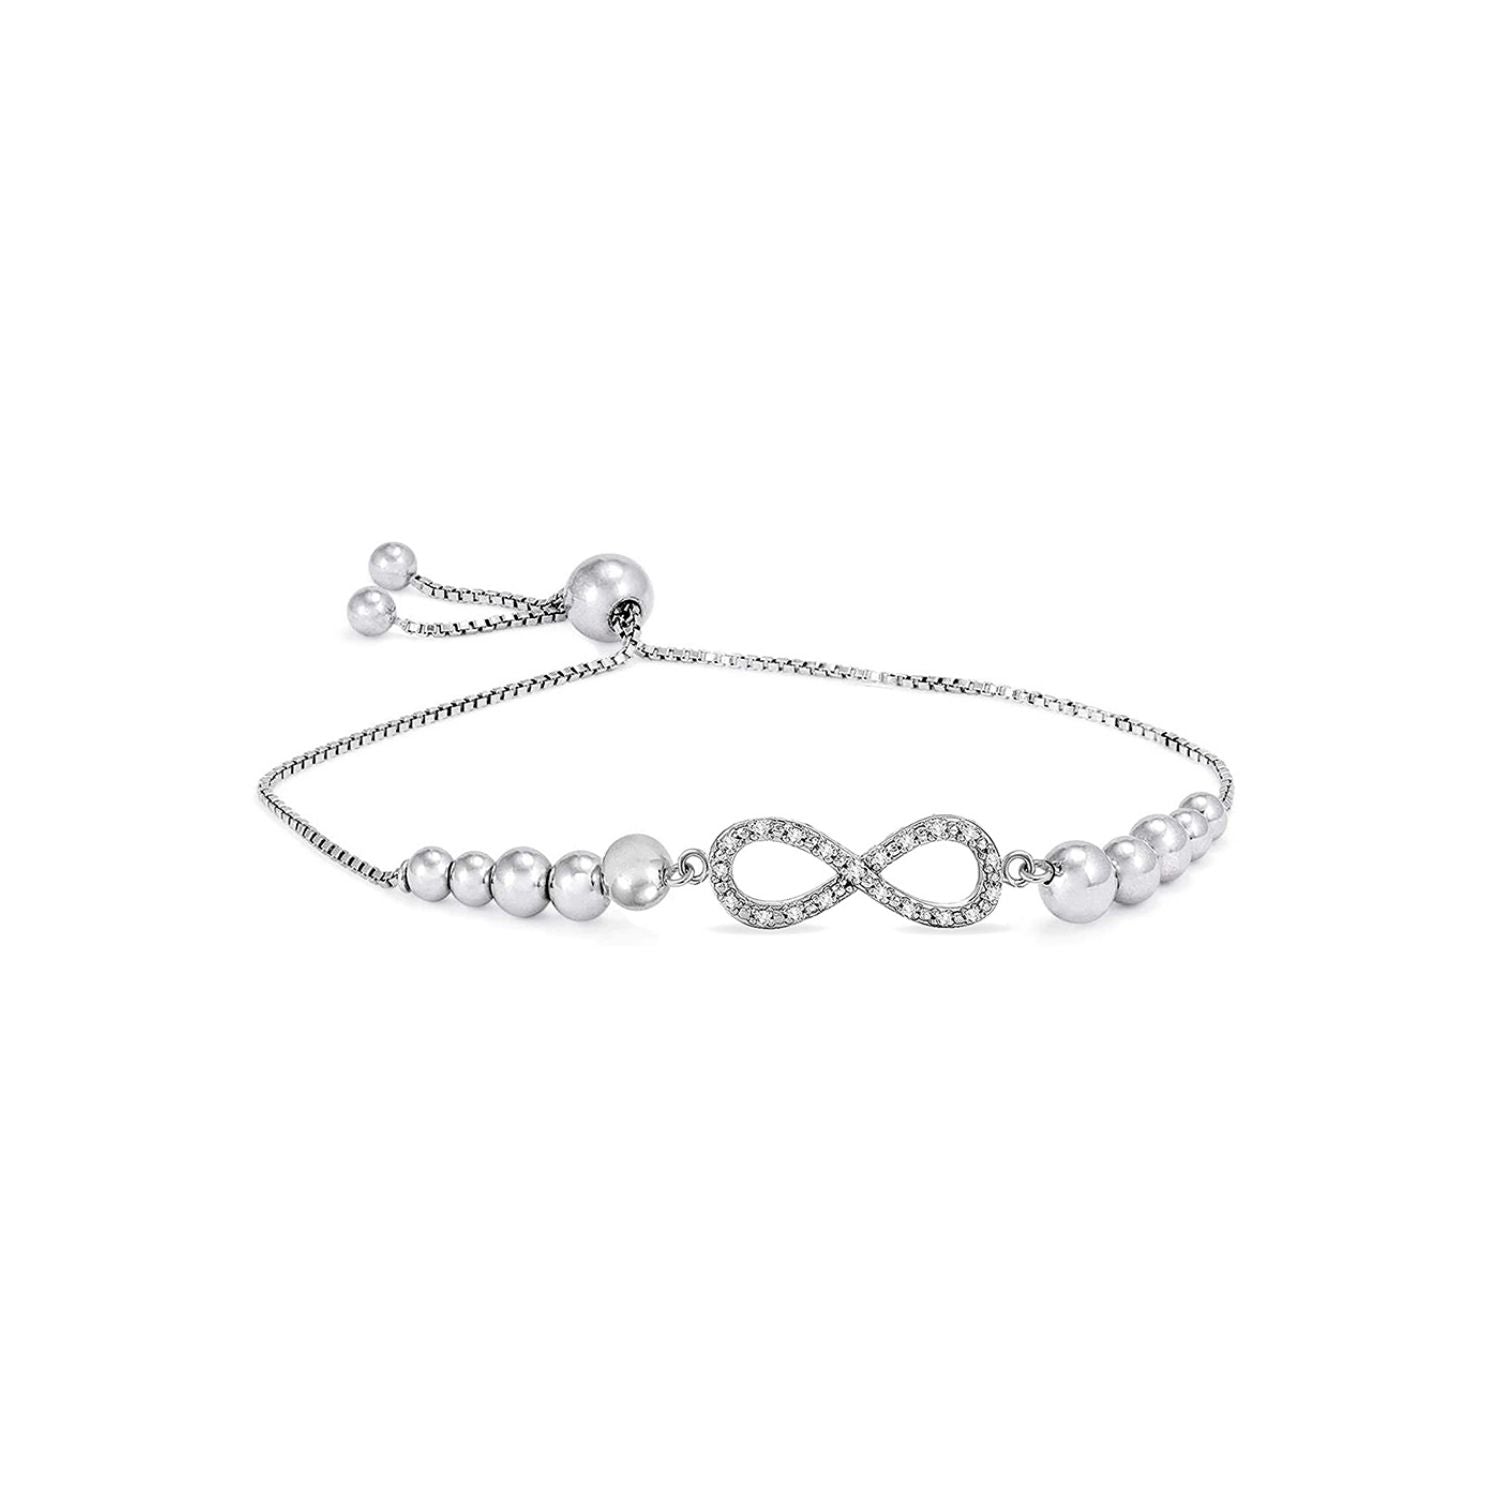 925 Sterling Silver Infinity CZ Ball Bead Sliding Bolo Bracelets for Women and Girls